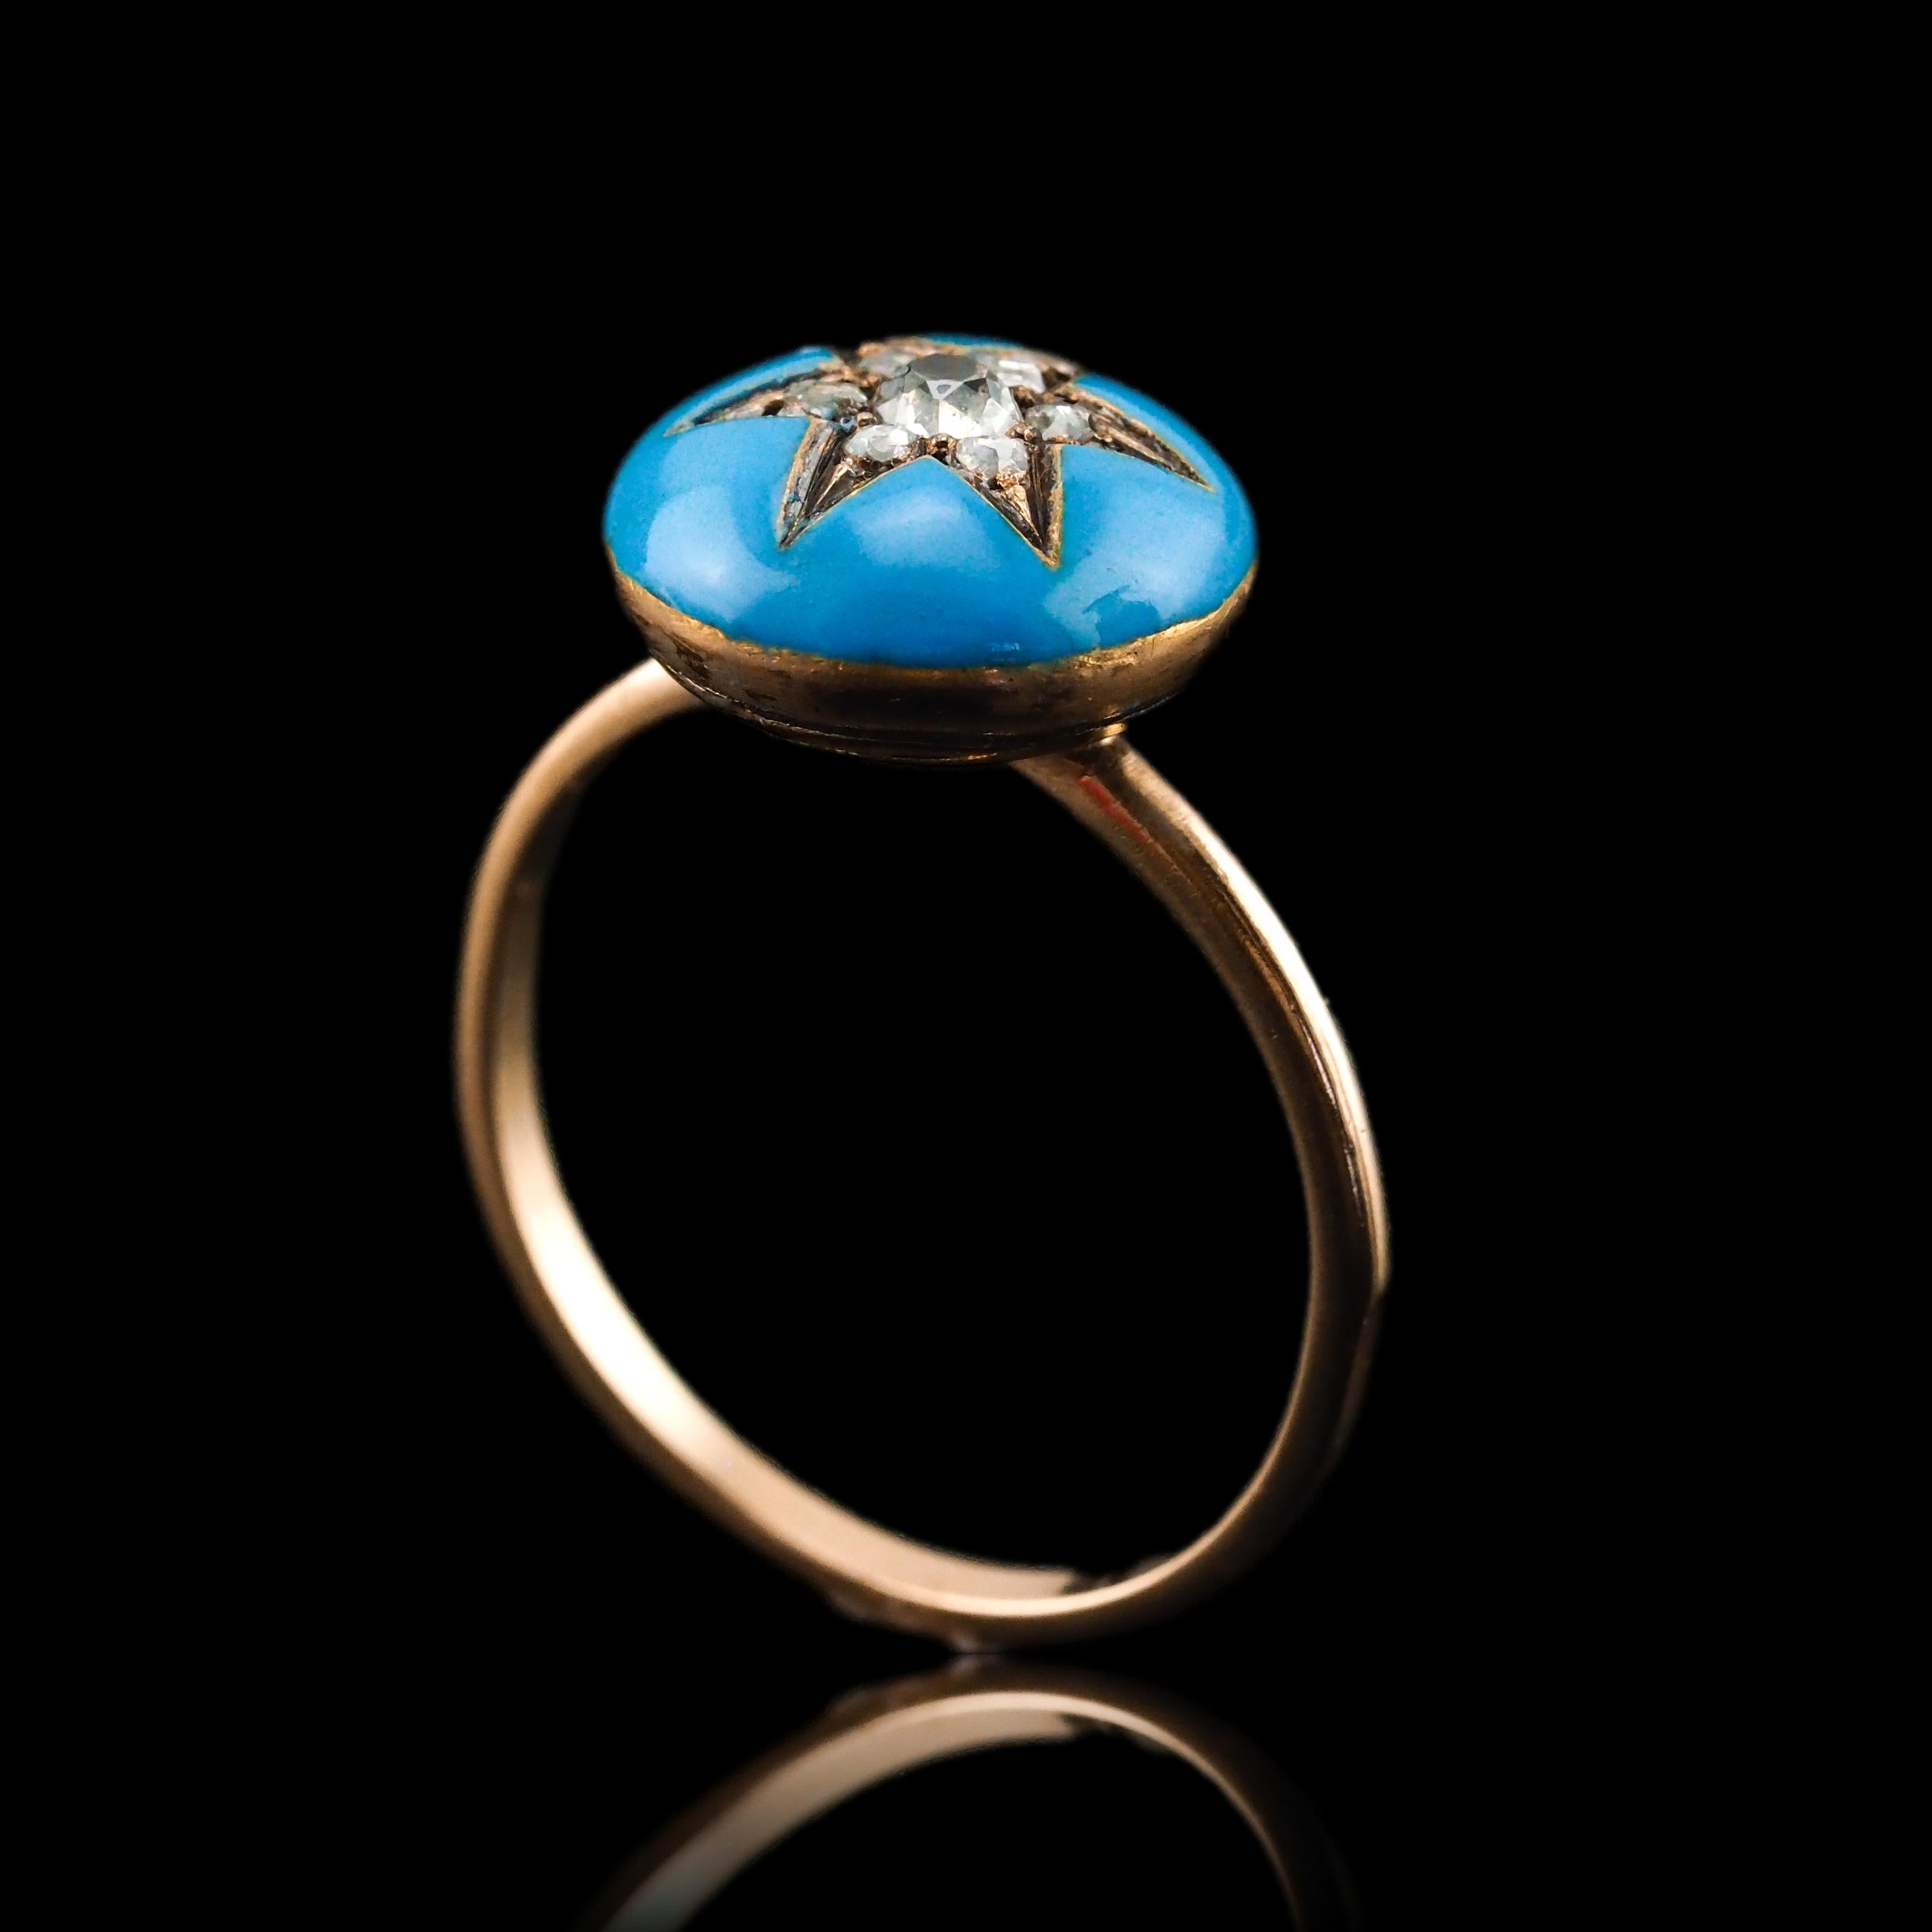 Antique Victorian Diamond Star Ring 9K Gold Blue Enamel Cabochon - c.1890 For Sale 2